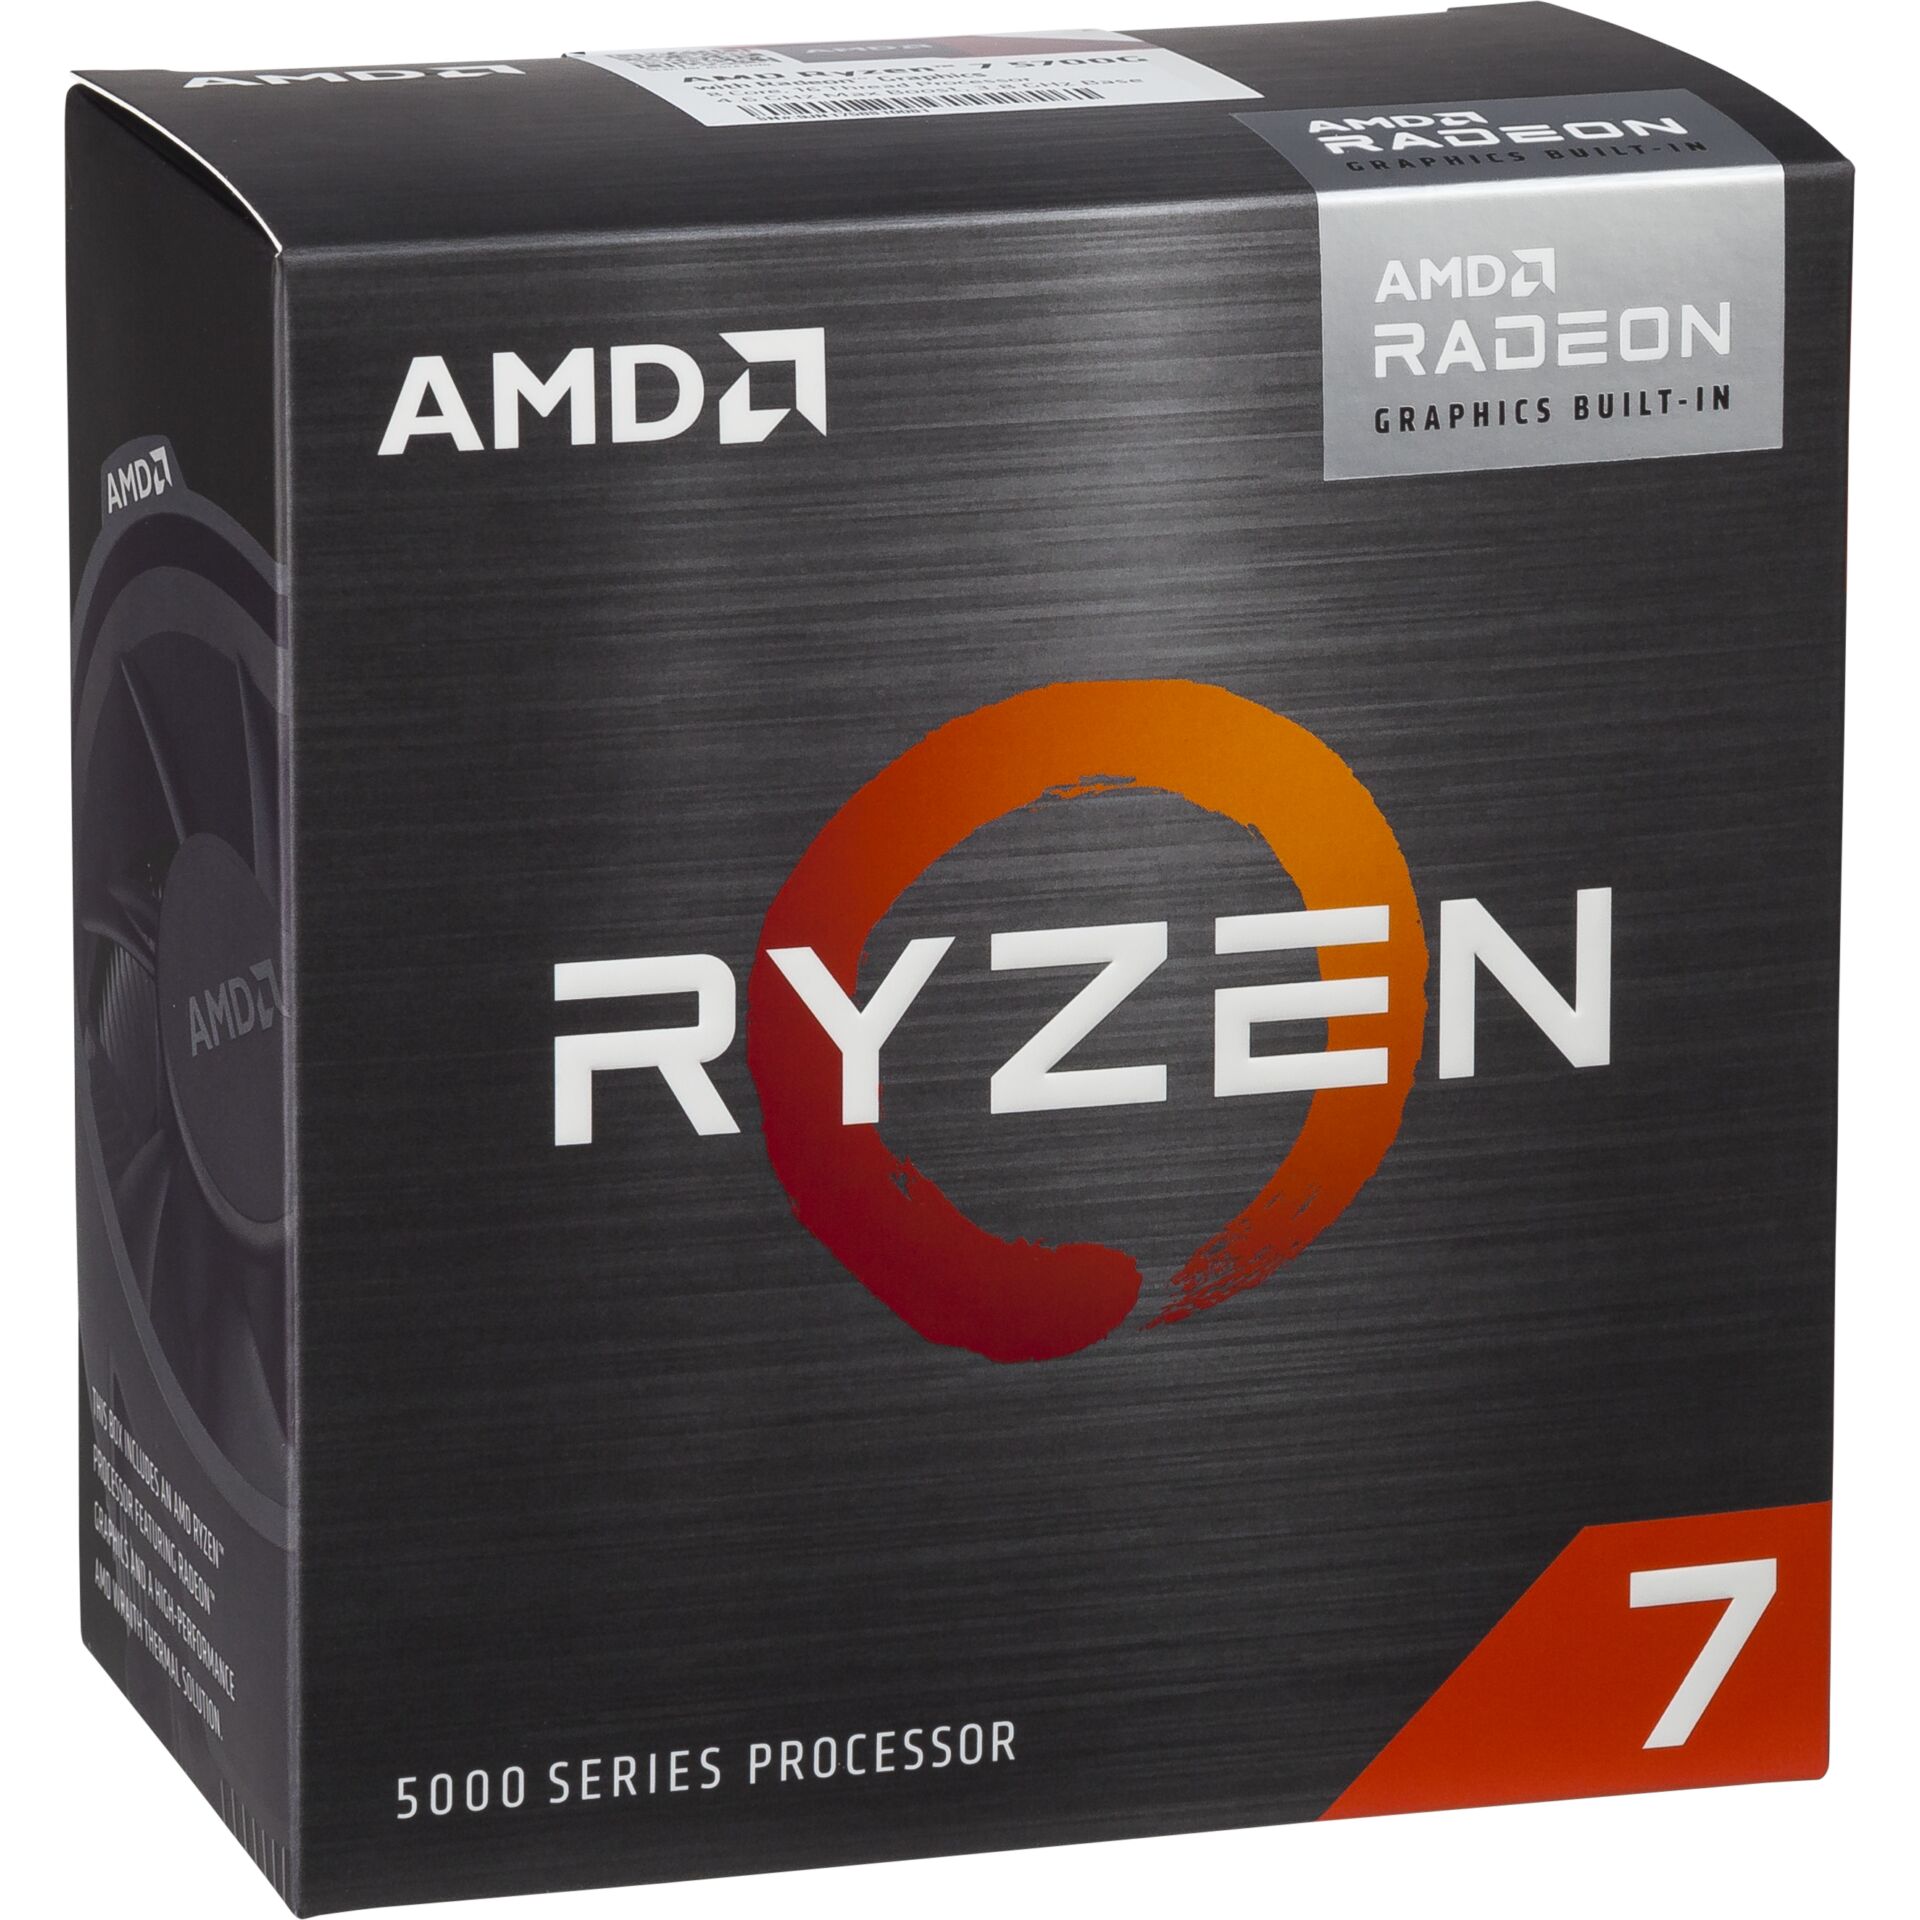 AMD Ryzen 7 5700G, 8C/16T, 3.80-4.60GHz, boxed AM4 (PGA), Cezanne CPU